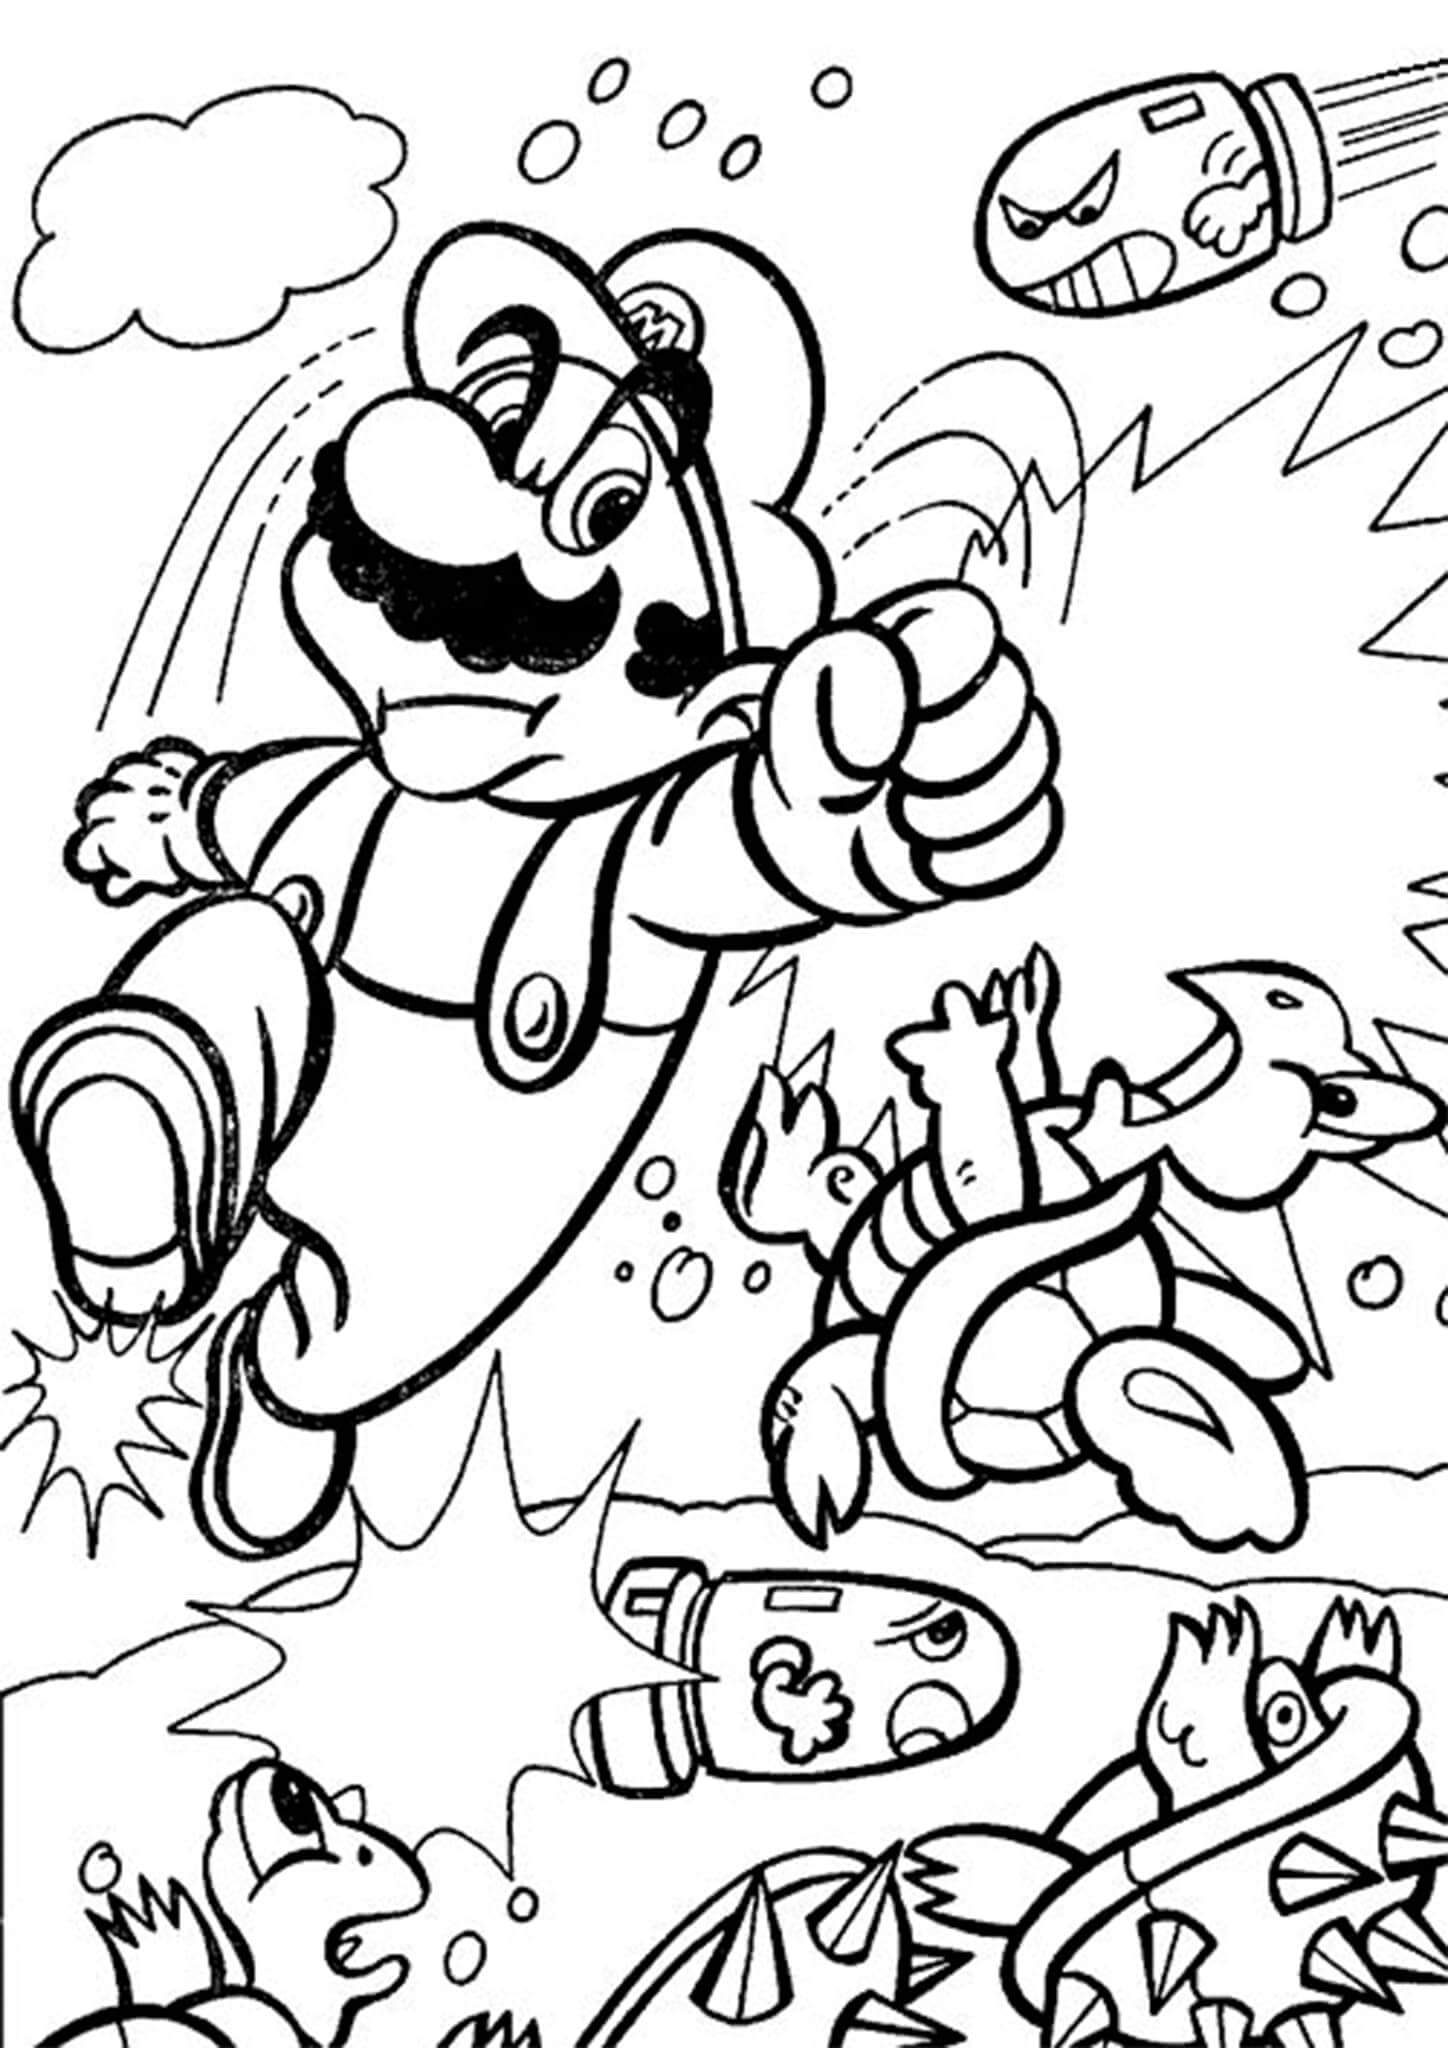 Mario Punch fargelegging